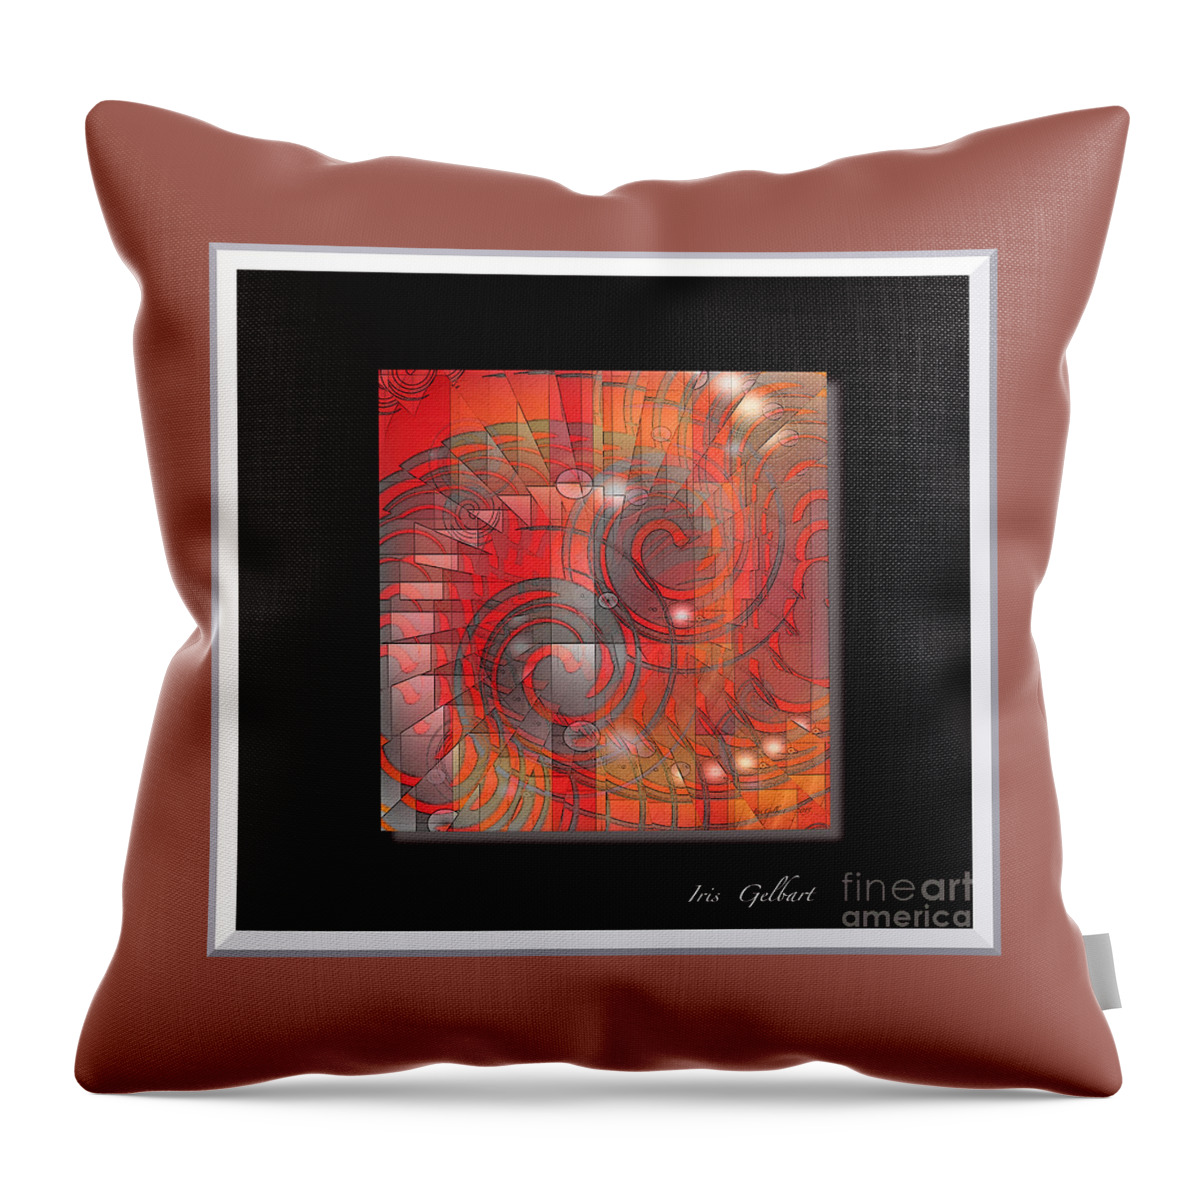 Abstract Throw Pillow featuring the digital art Energy #3 by Iris Gelbart